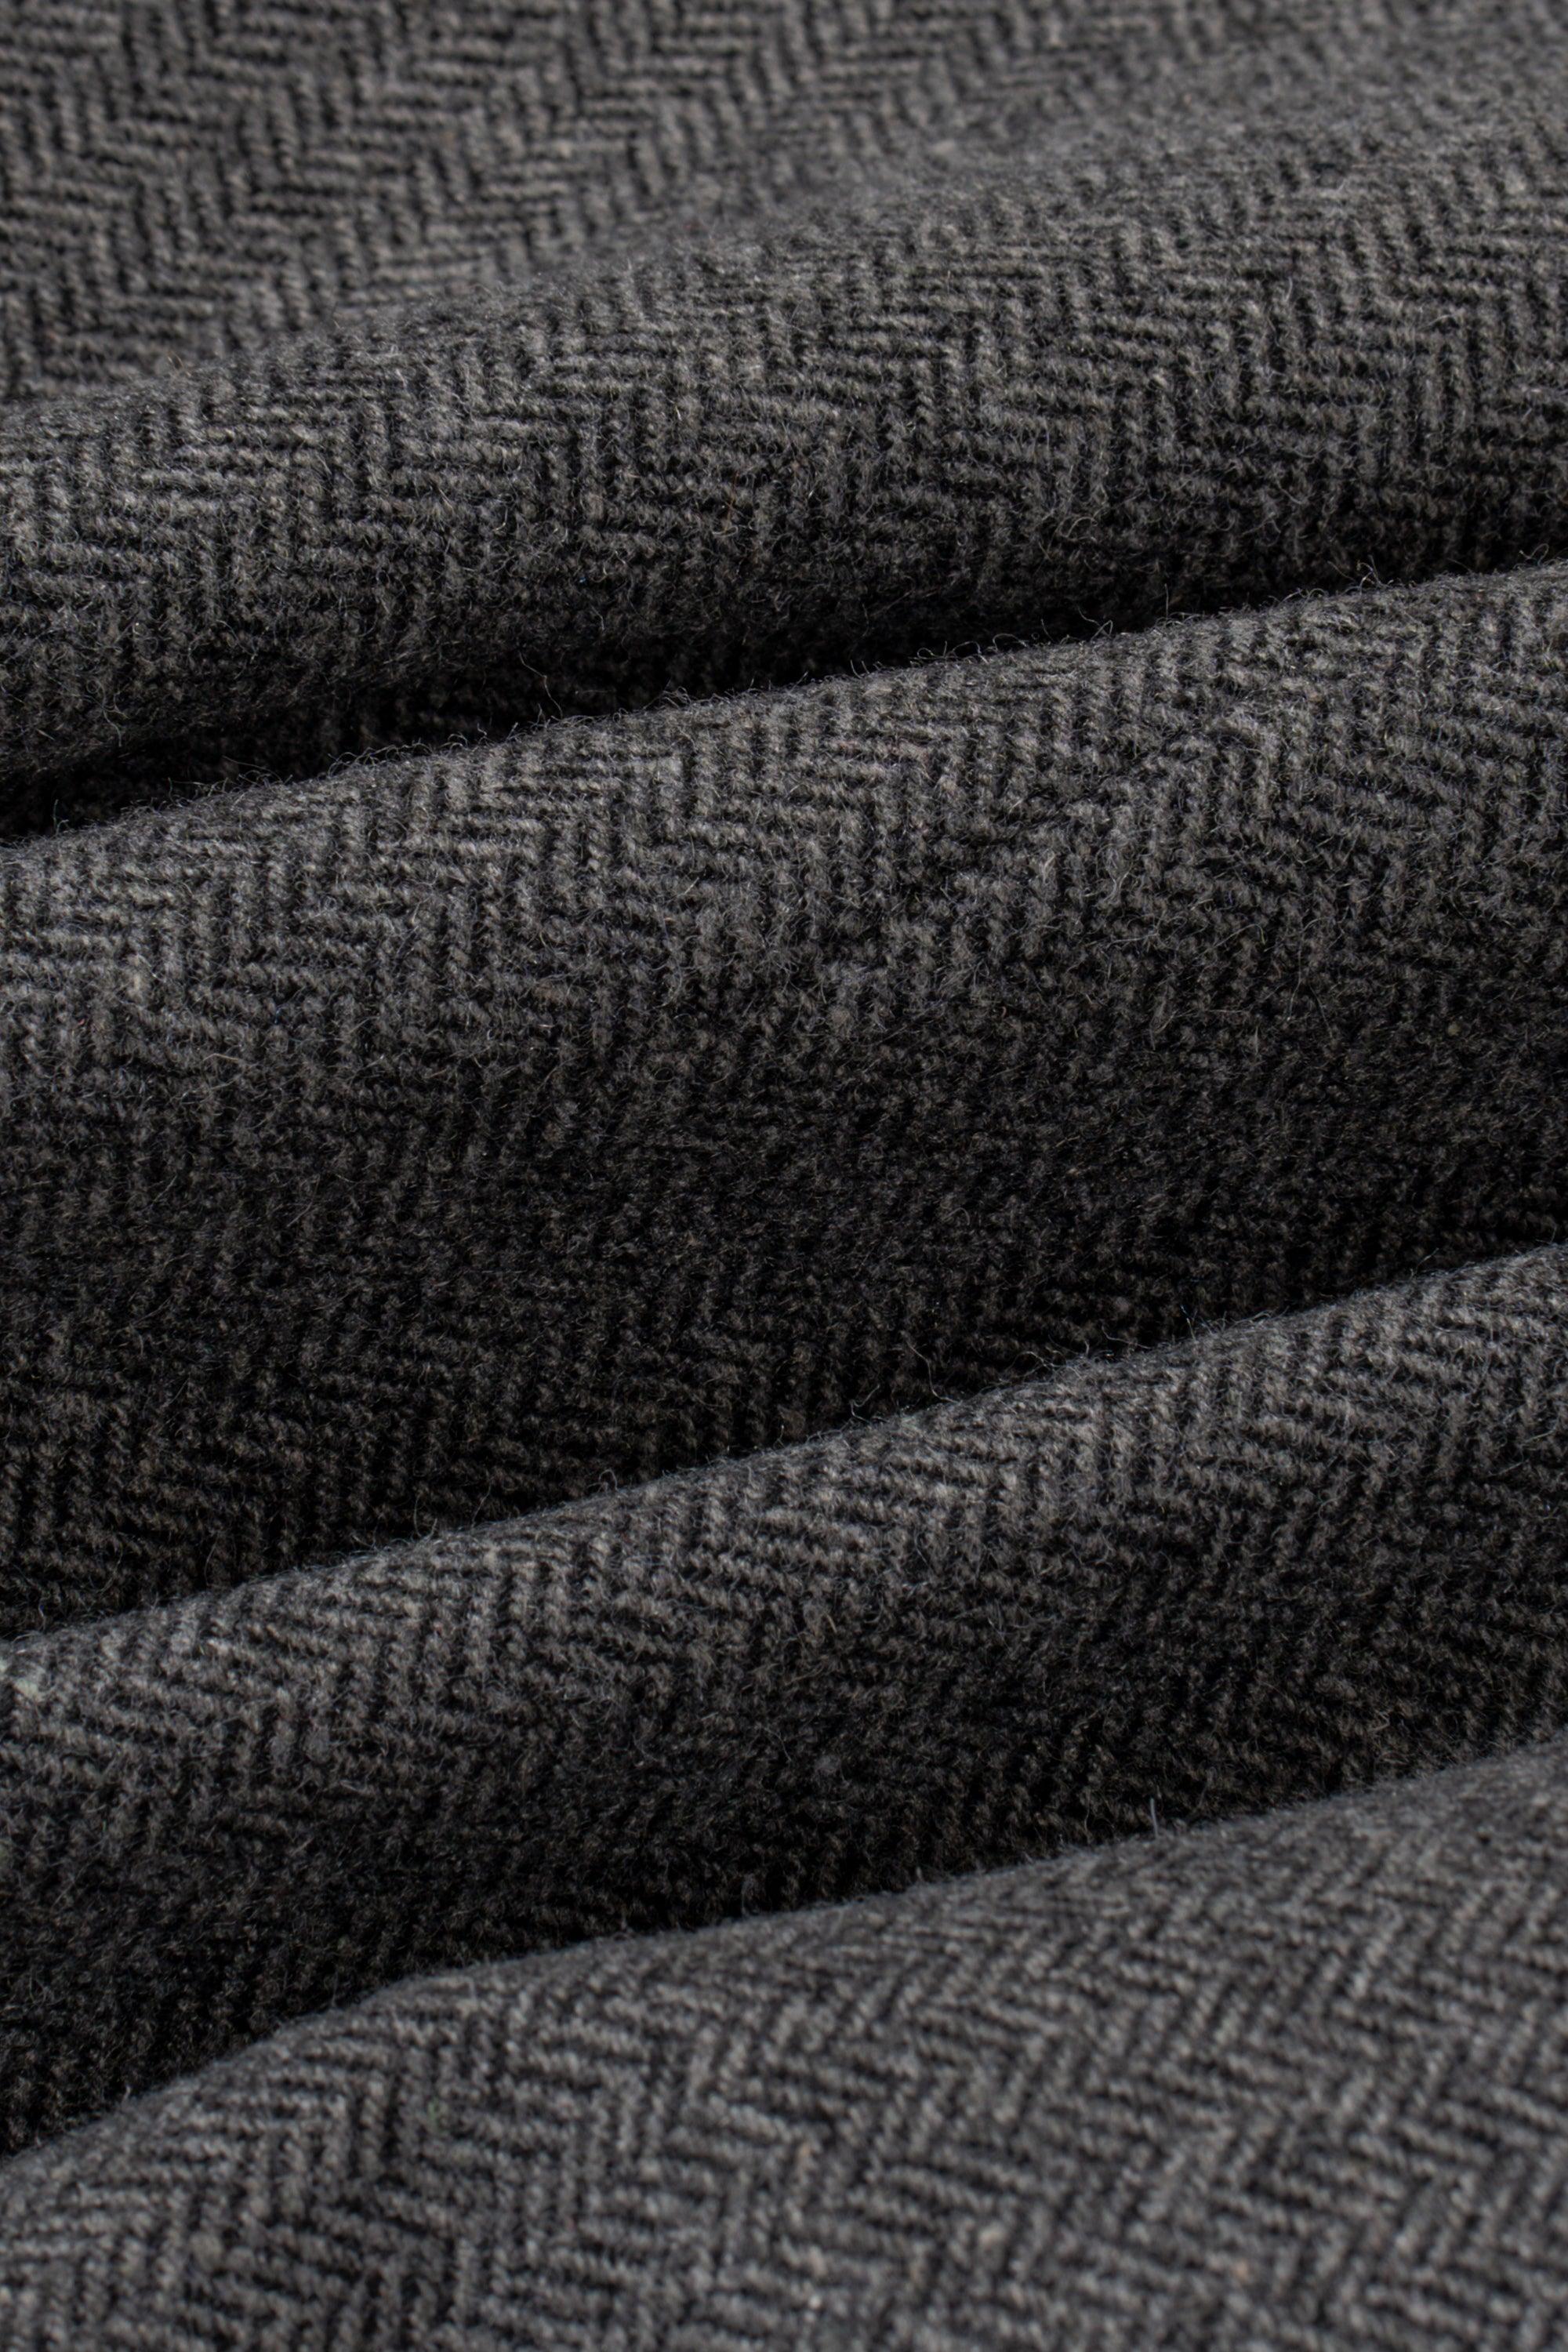 Martez grey tweed three piece suit fabric swatch